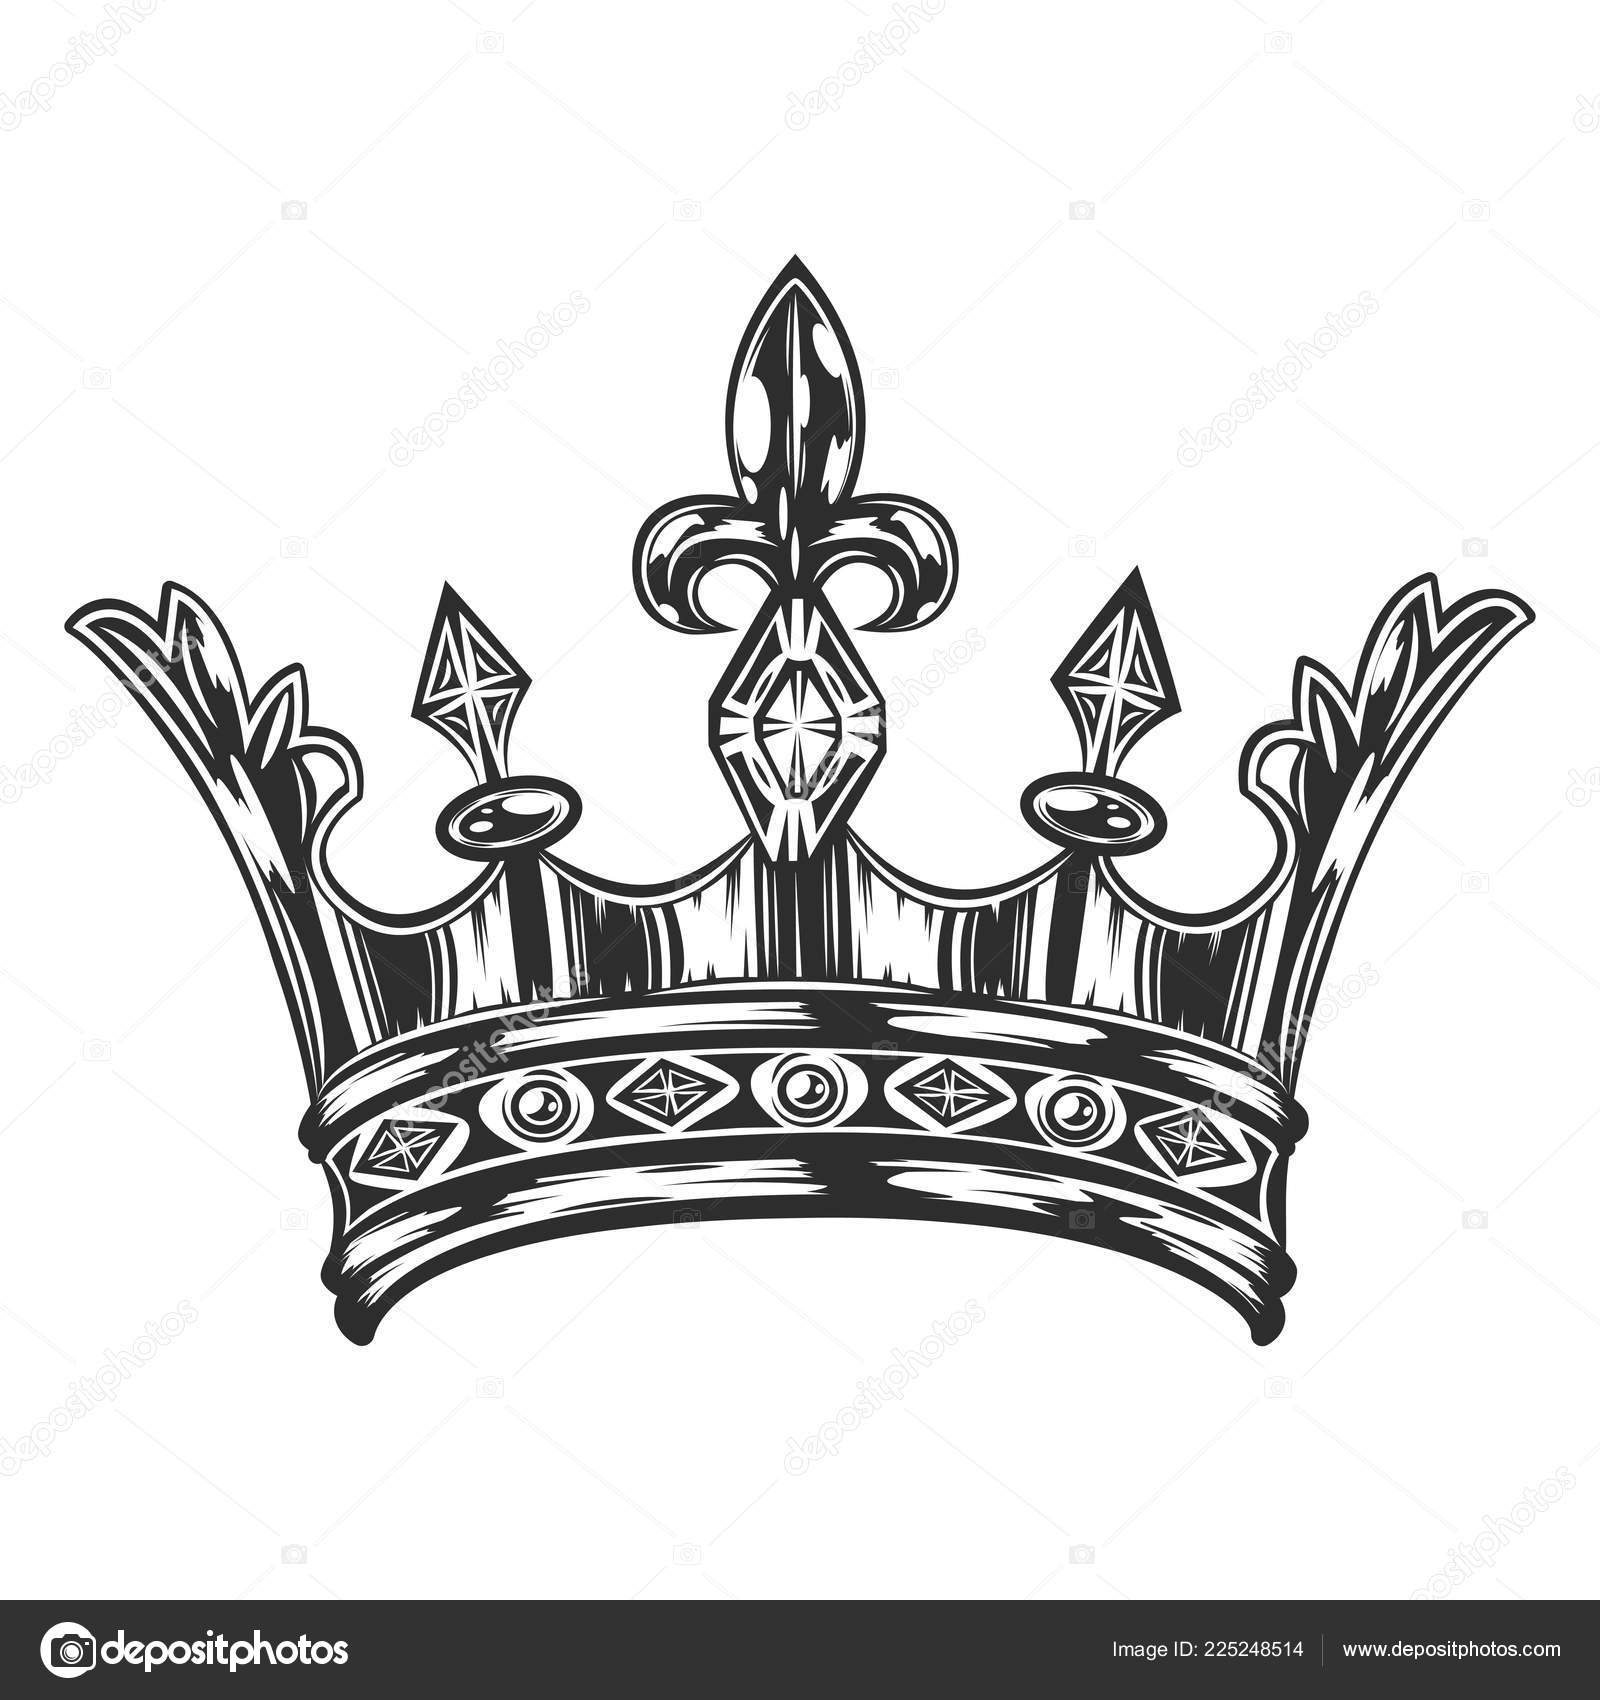 Download Royal crown template | Vintage royal crown template ...